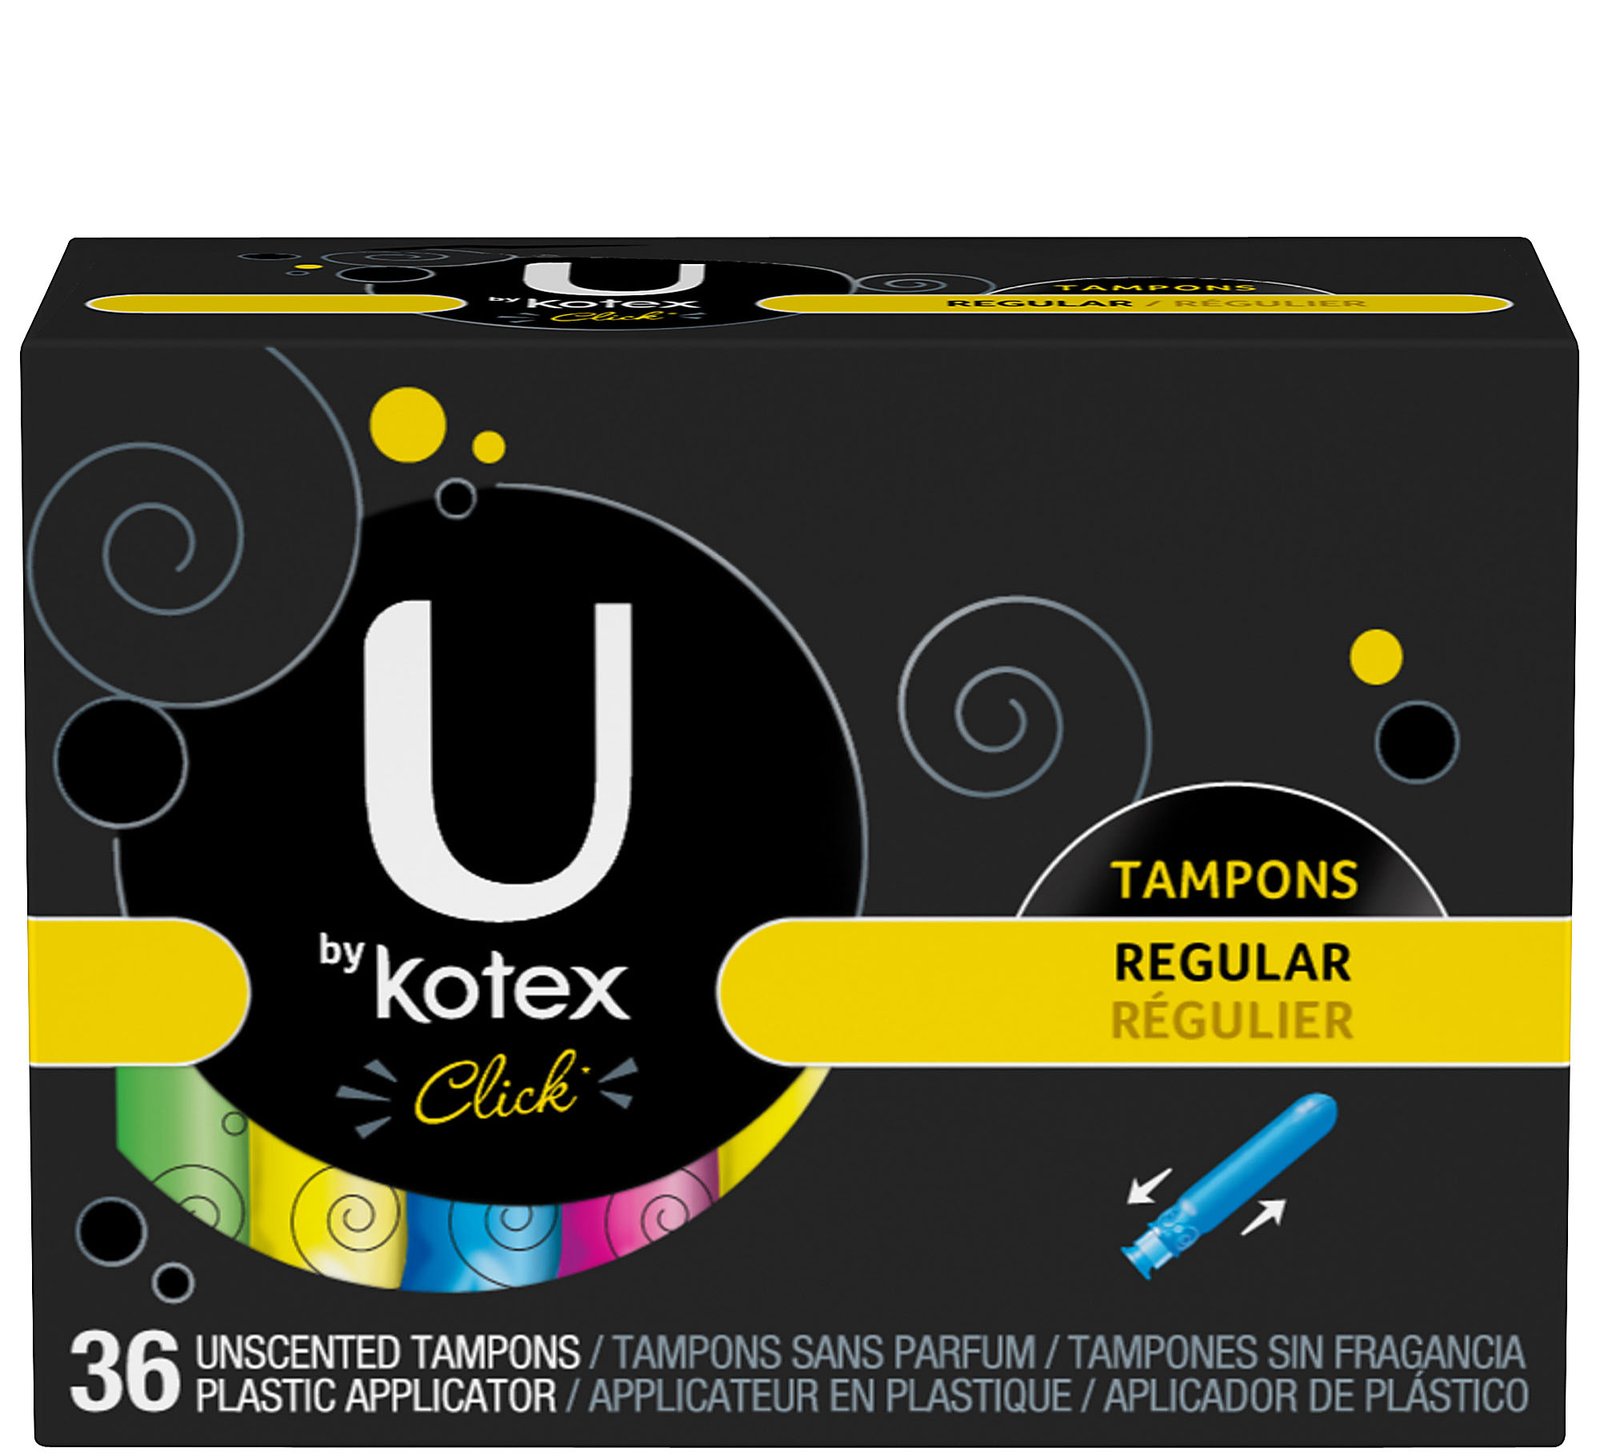 U by Kotex Free Samples